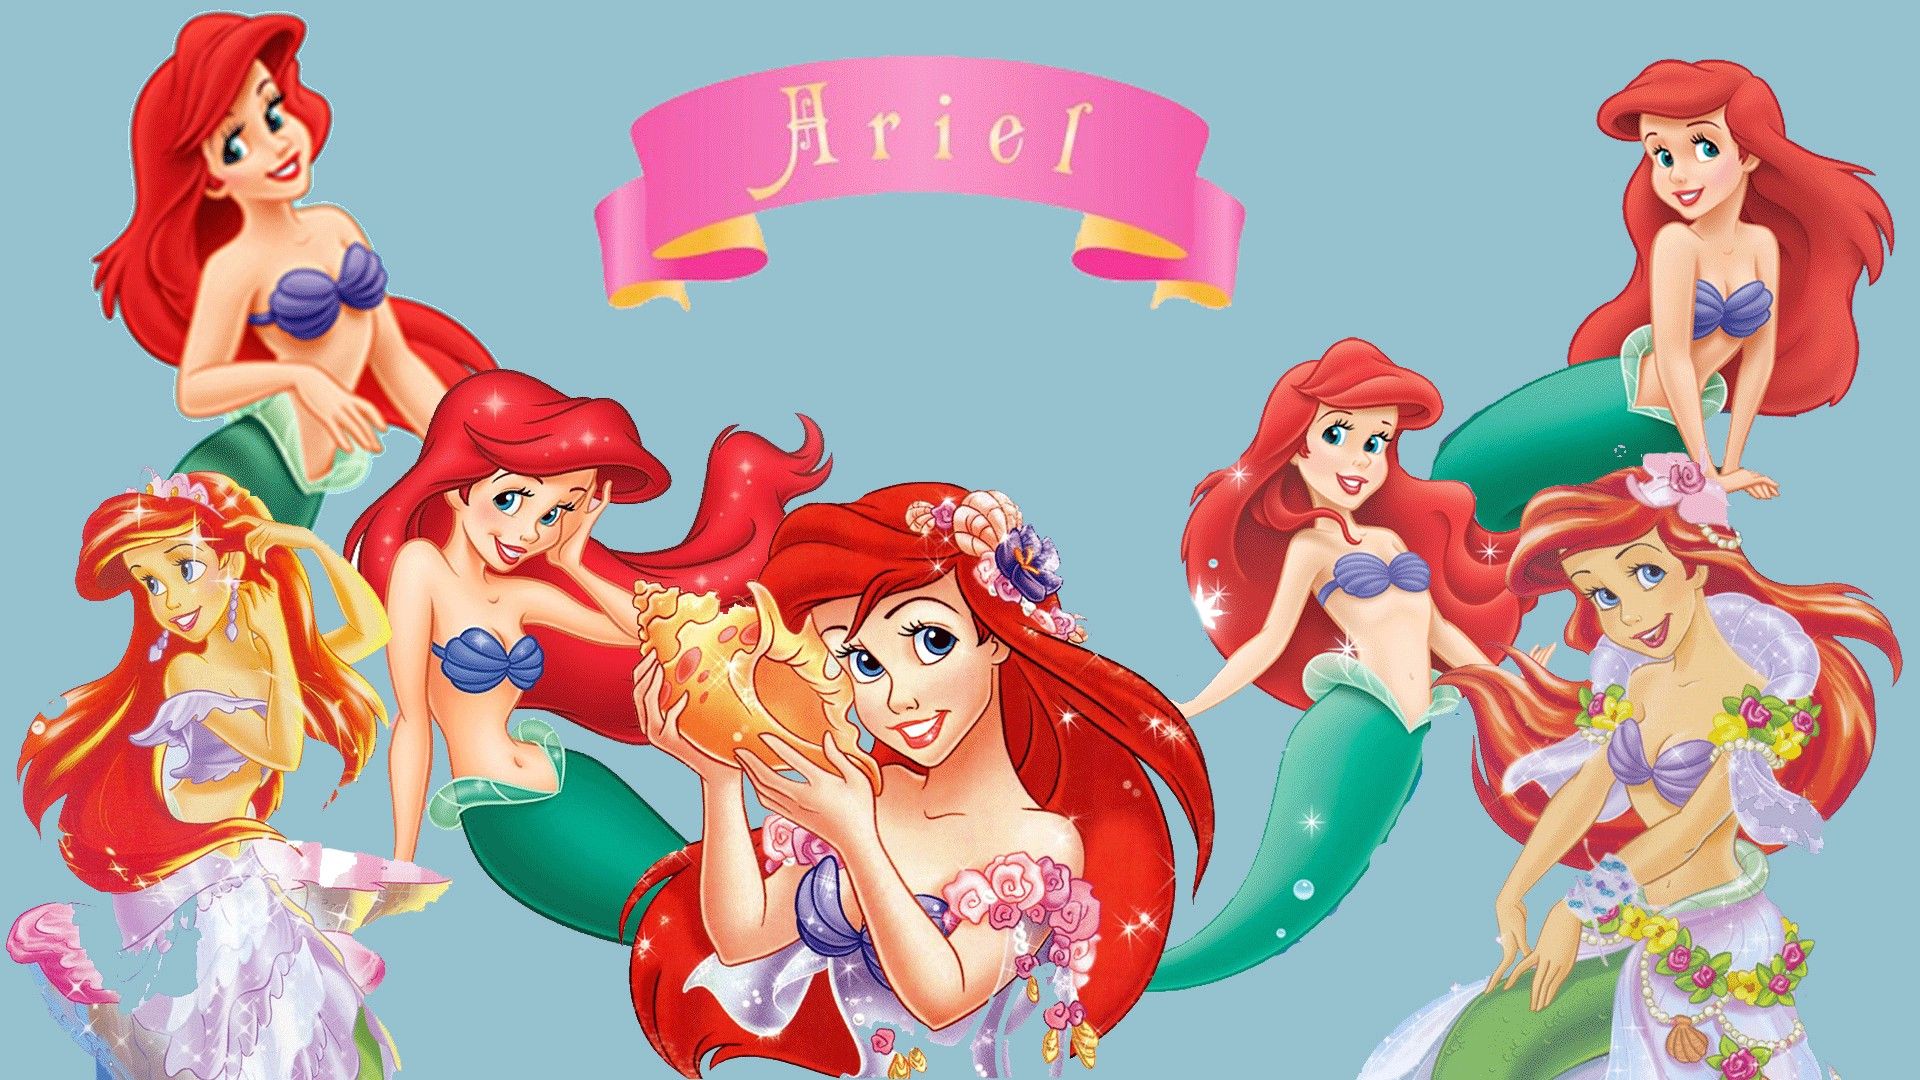 Free download Disney Princess Ariel Characters HD Wallpaper of Cartoon [1920x1080] for your Desktop, Mobile & Tablet. Explore Wallpaper Princess Ariel. Ariel Atom Wallpaper, Ariel Wallpaper, Ariel Wallpaper